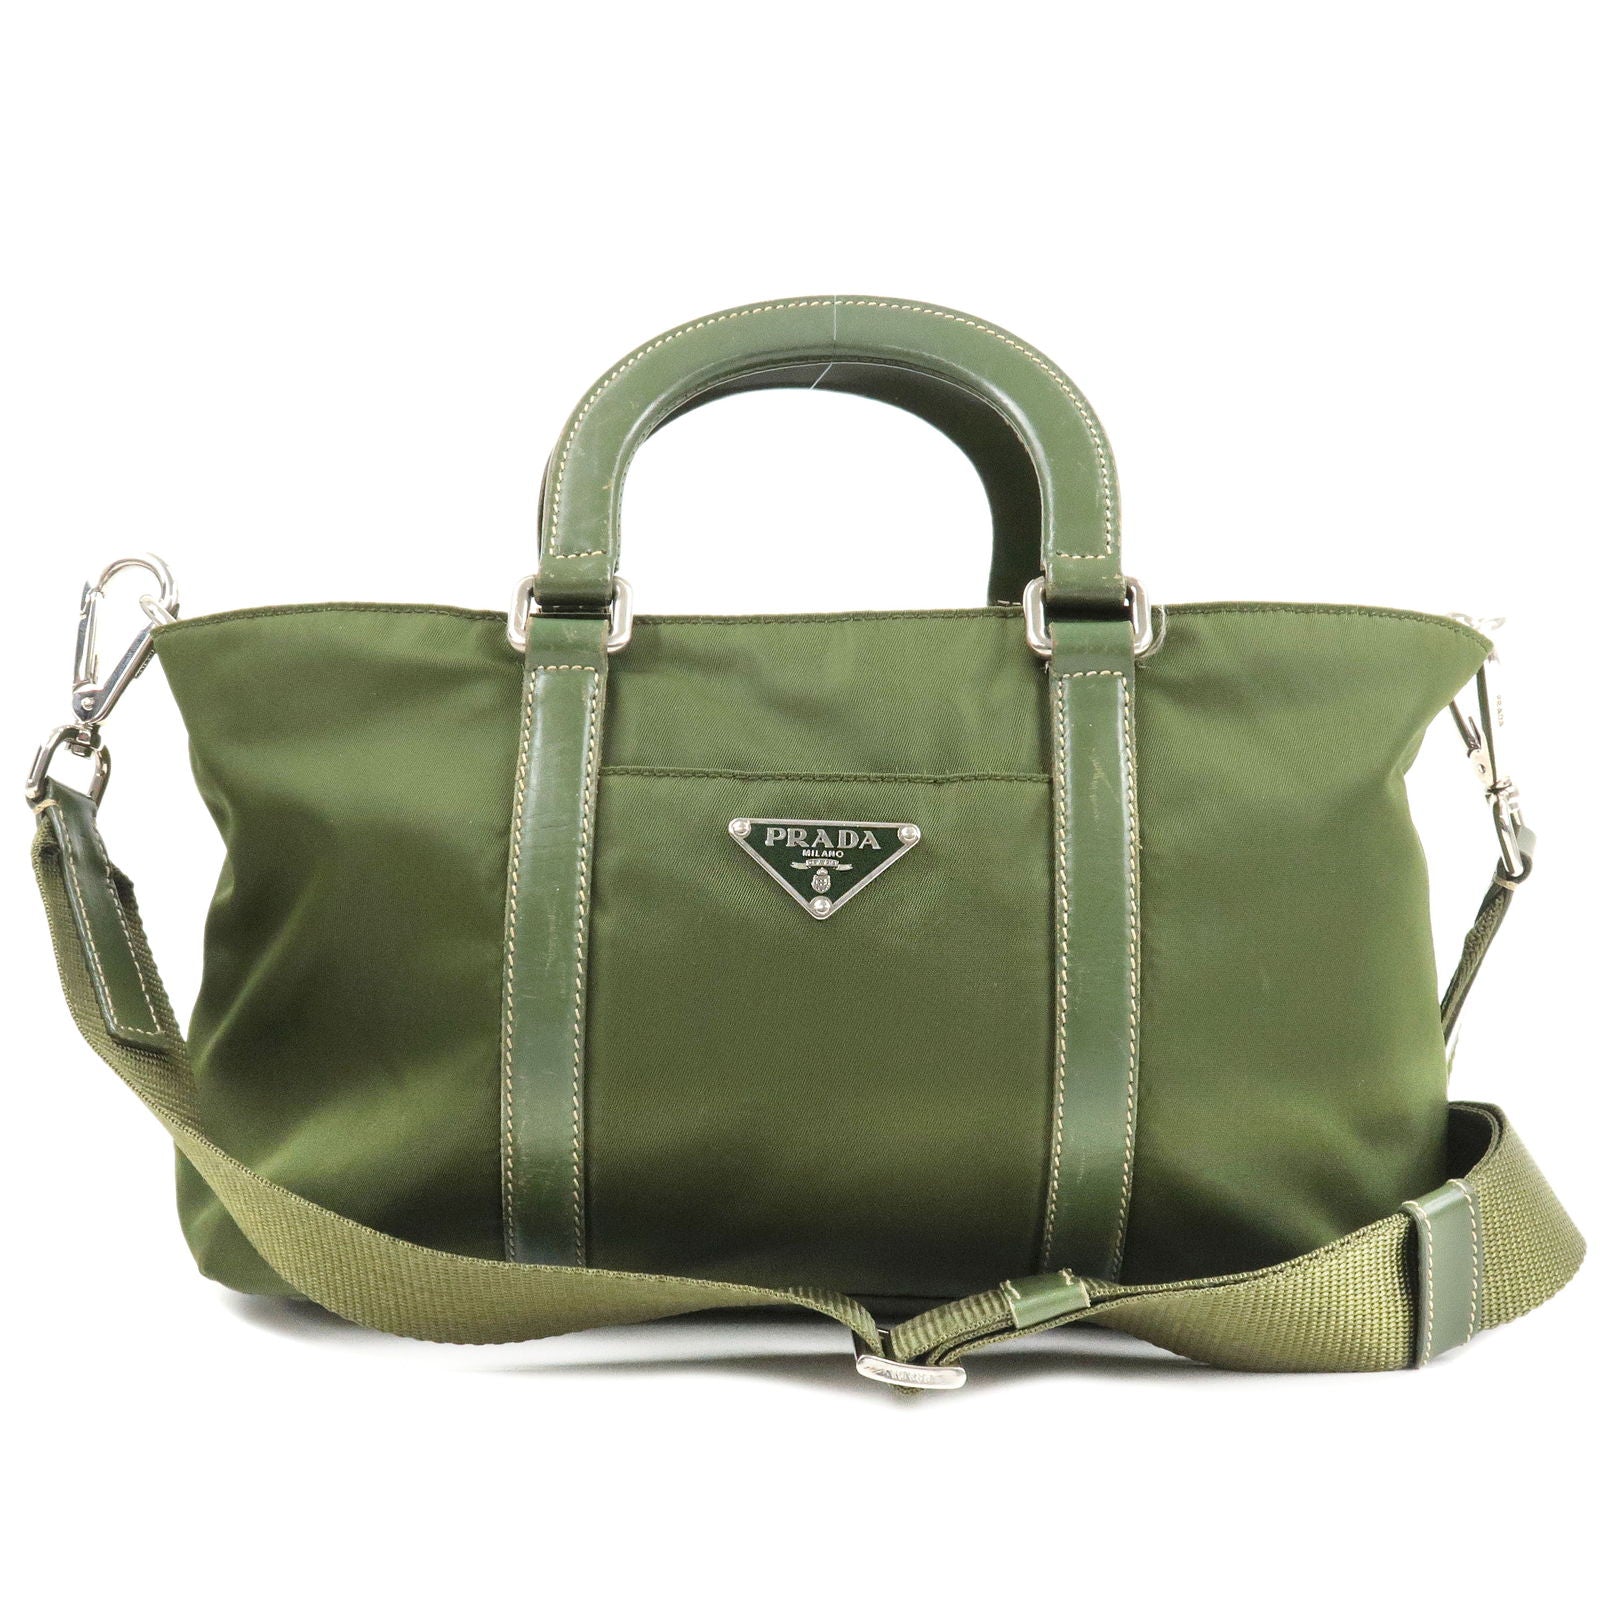 Prada Cleo Handbag in Green Leather